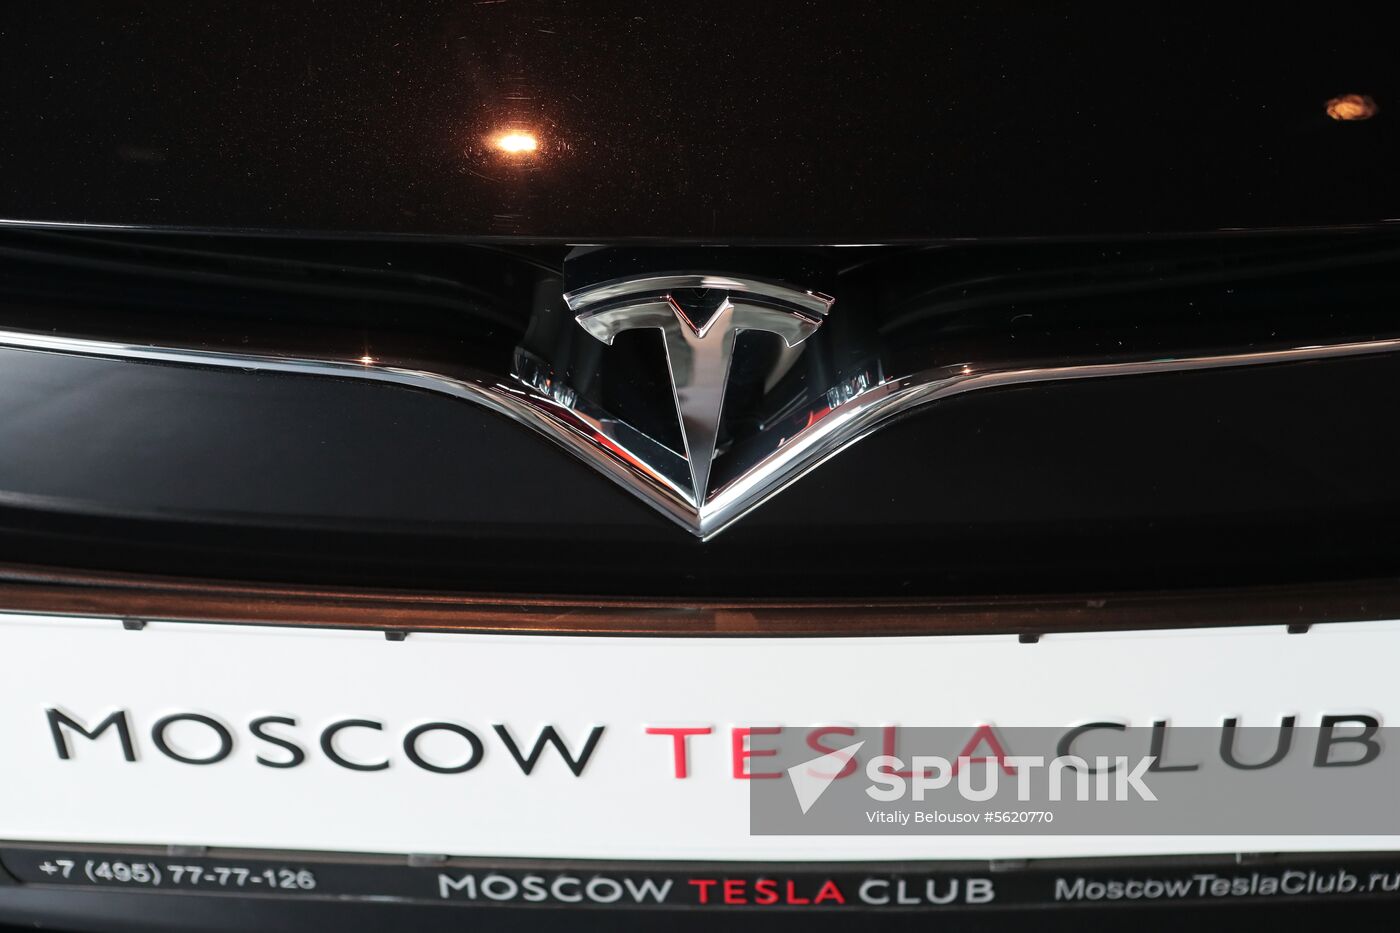 Moscow Tesla Club motor show